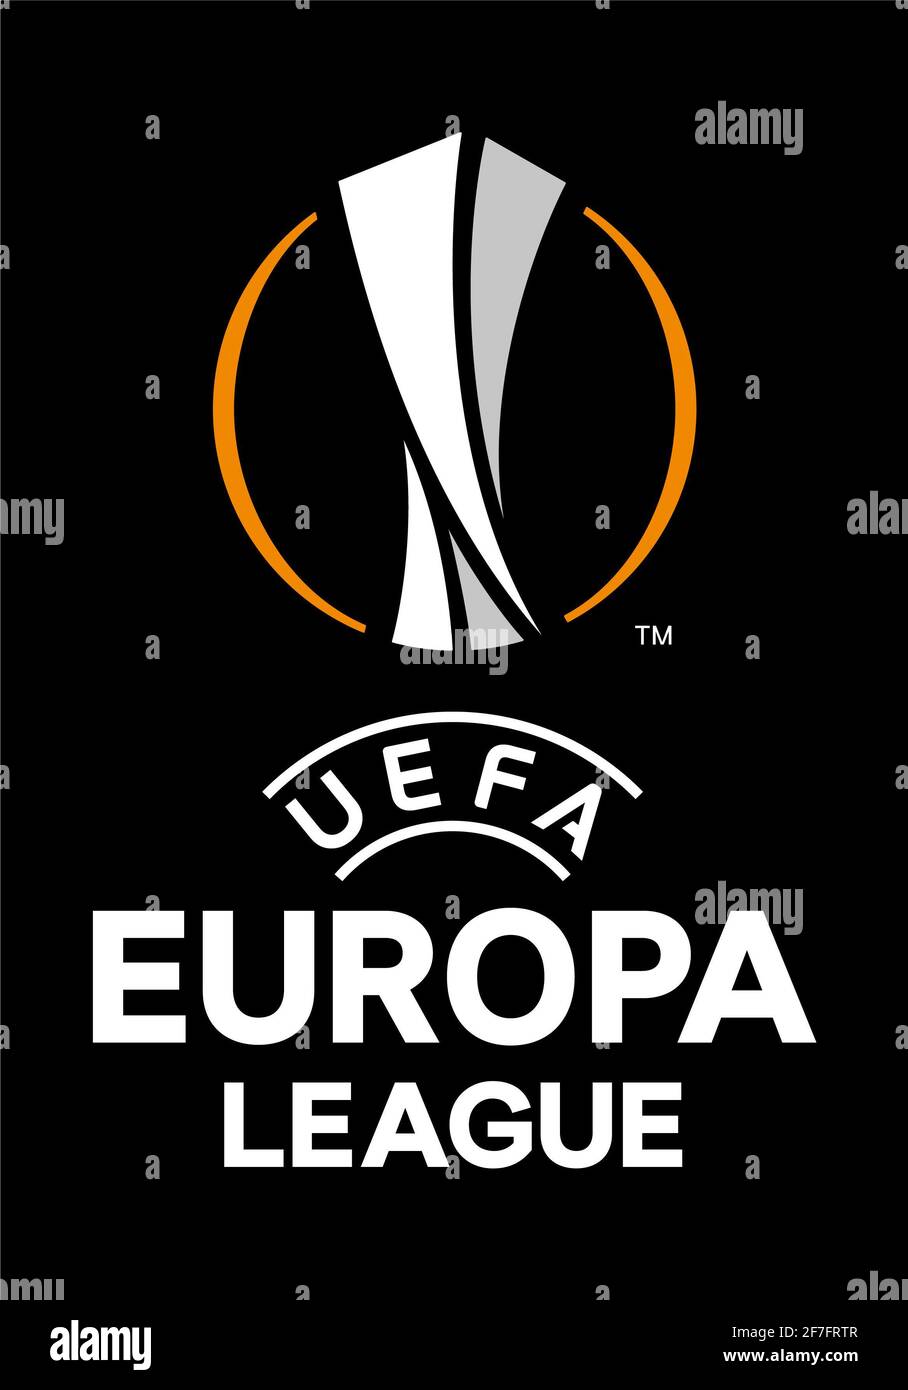 Europa League - GavinHanhalyn